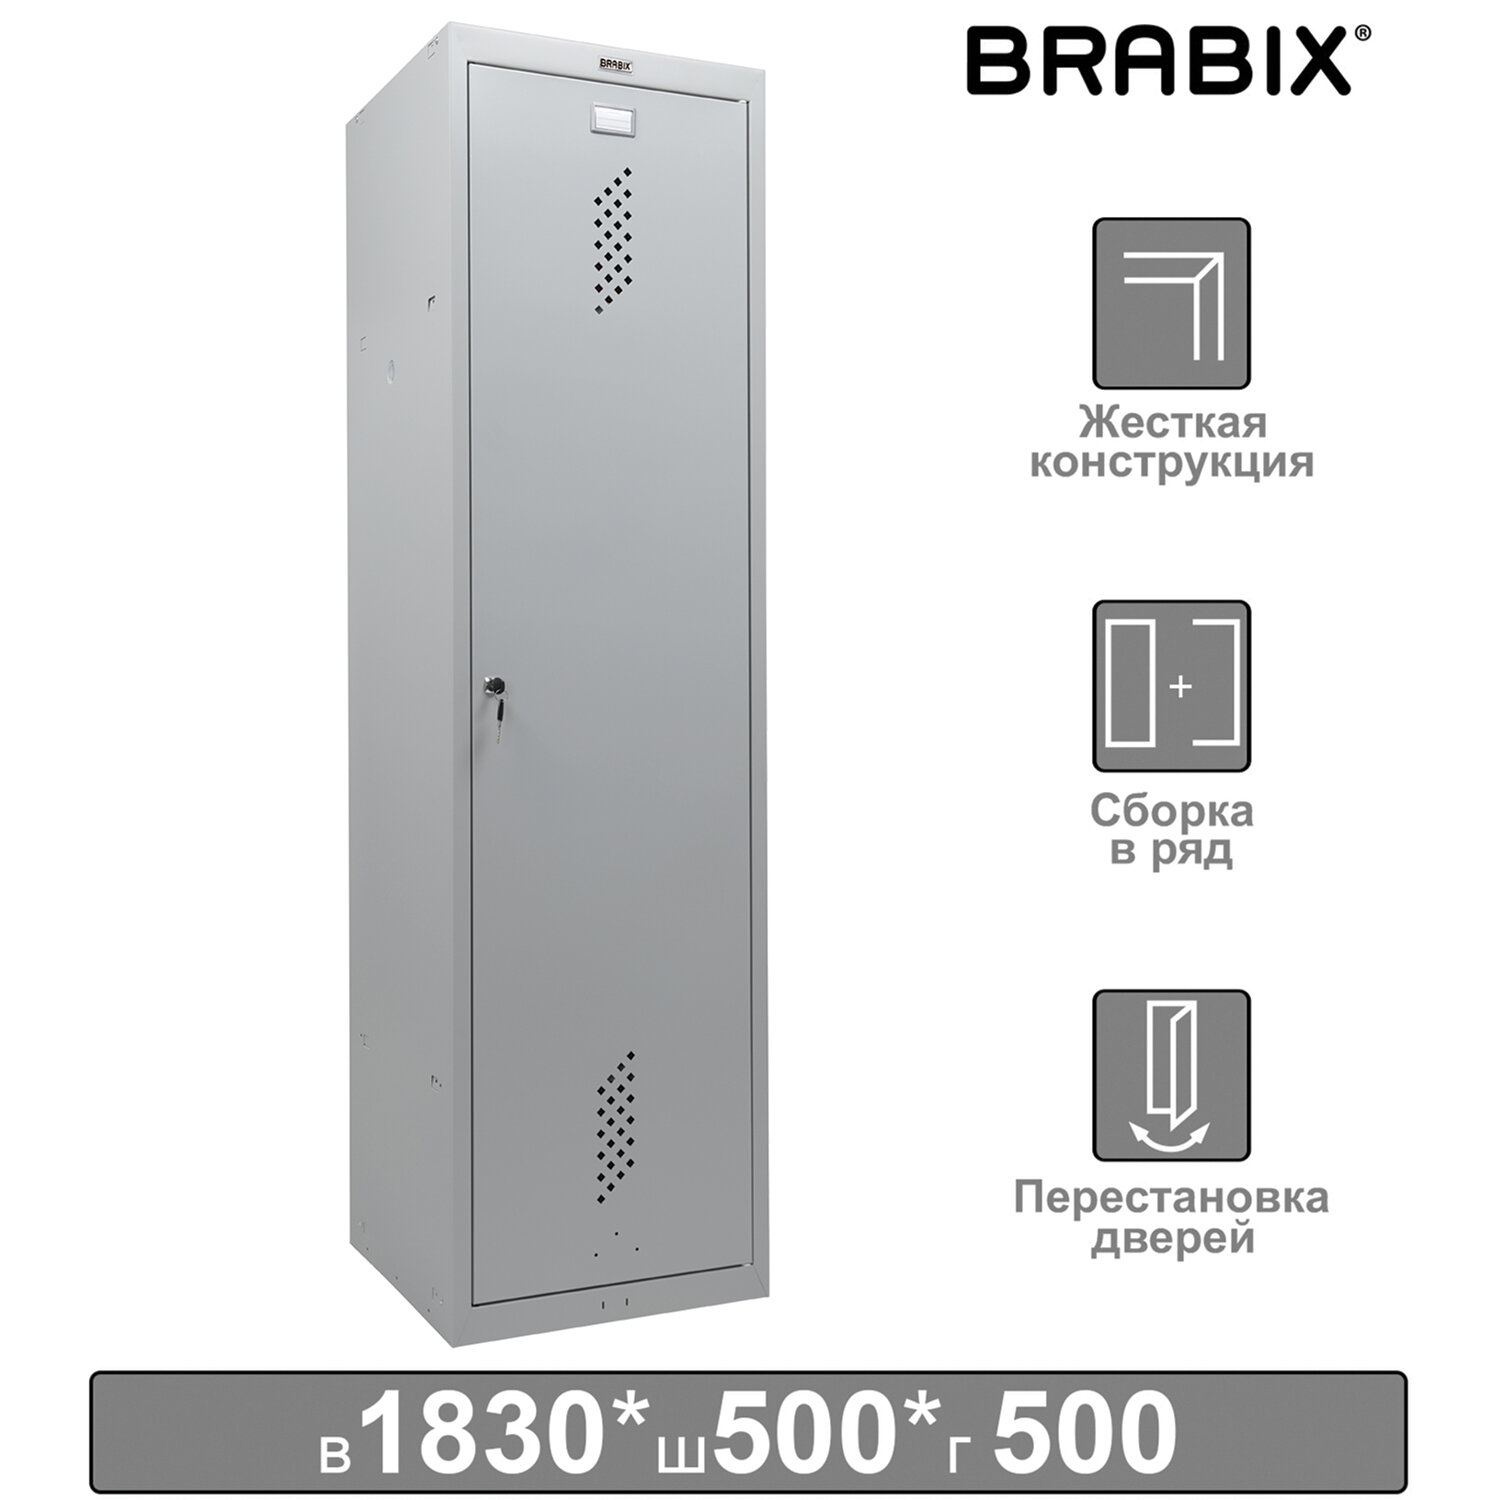 Brabix     BRABIX LK 11-50, , 2 , 1830500500 , 22 , 291132, S230BR404102